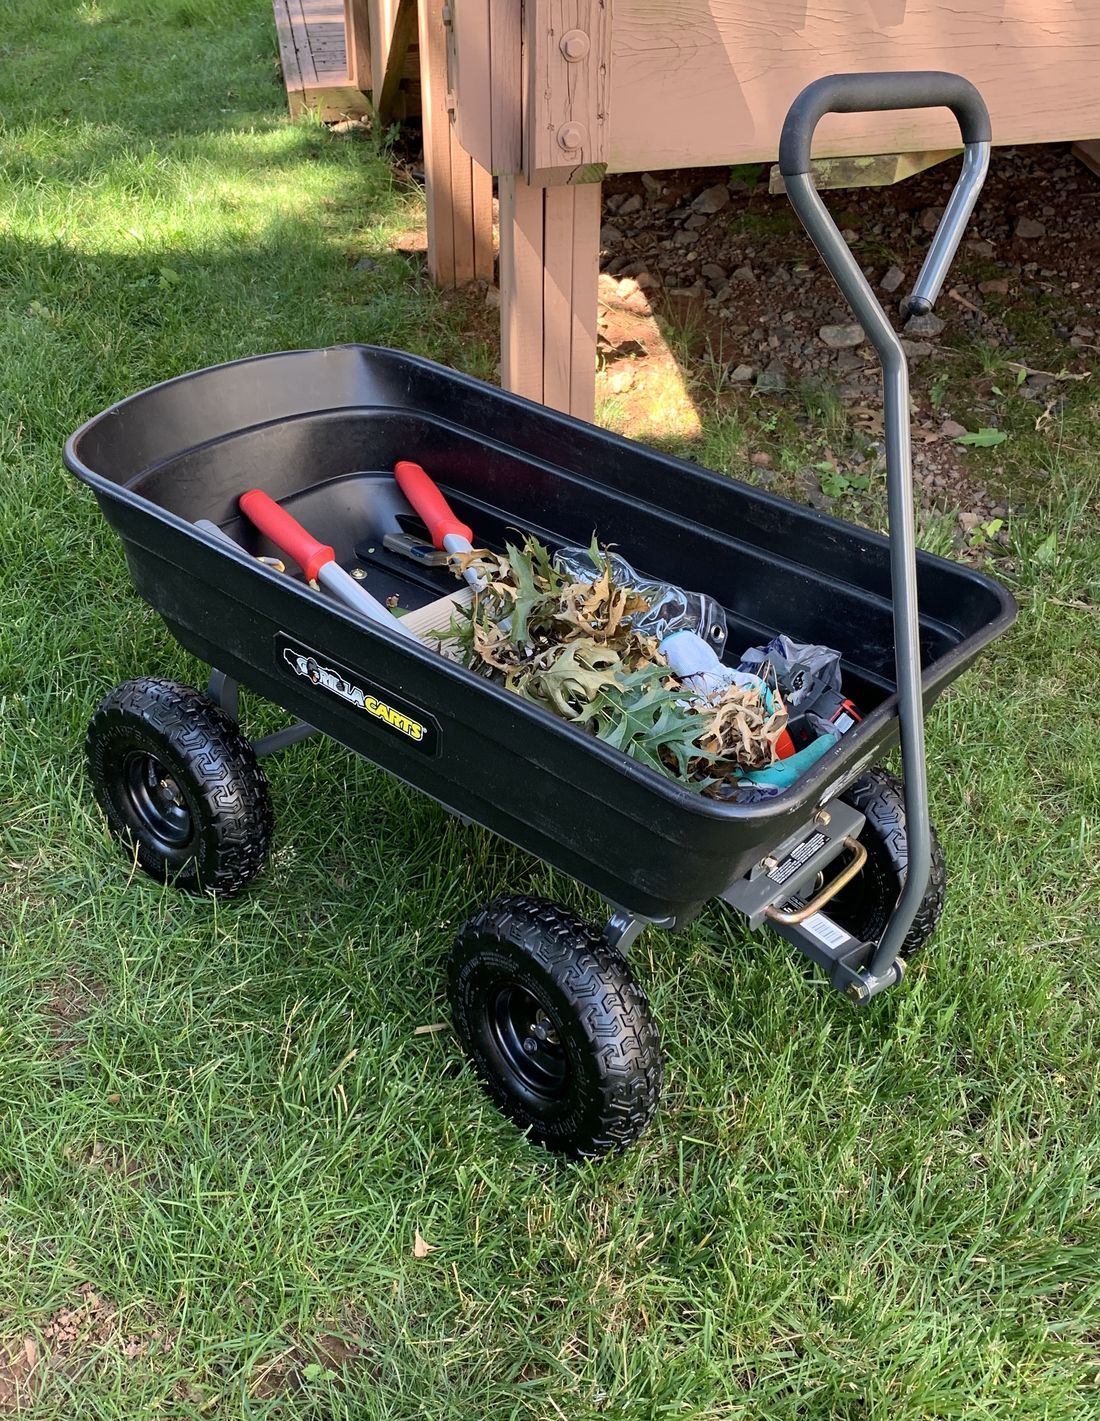 Gardening Cart from eBay